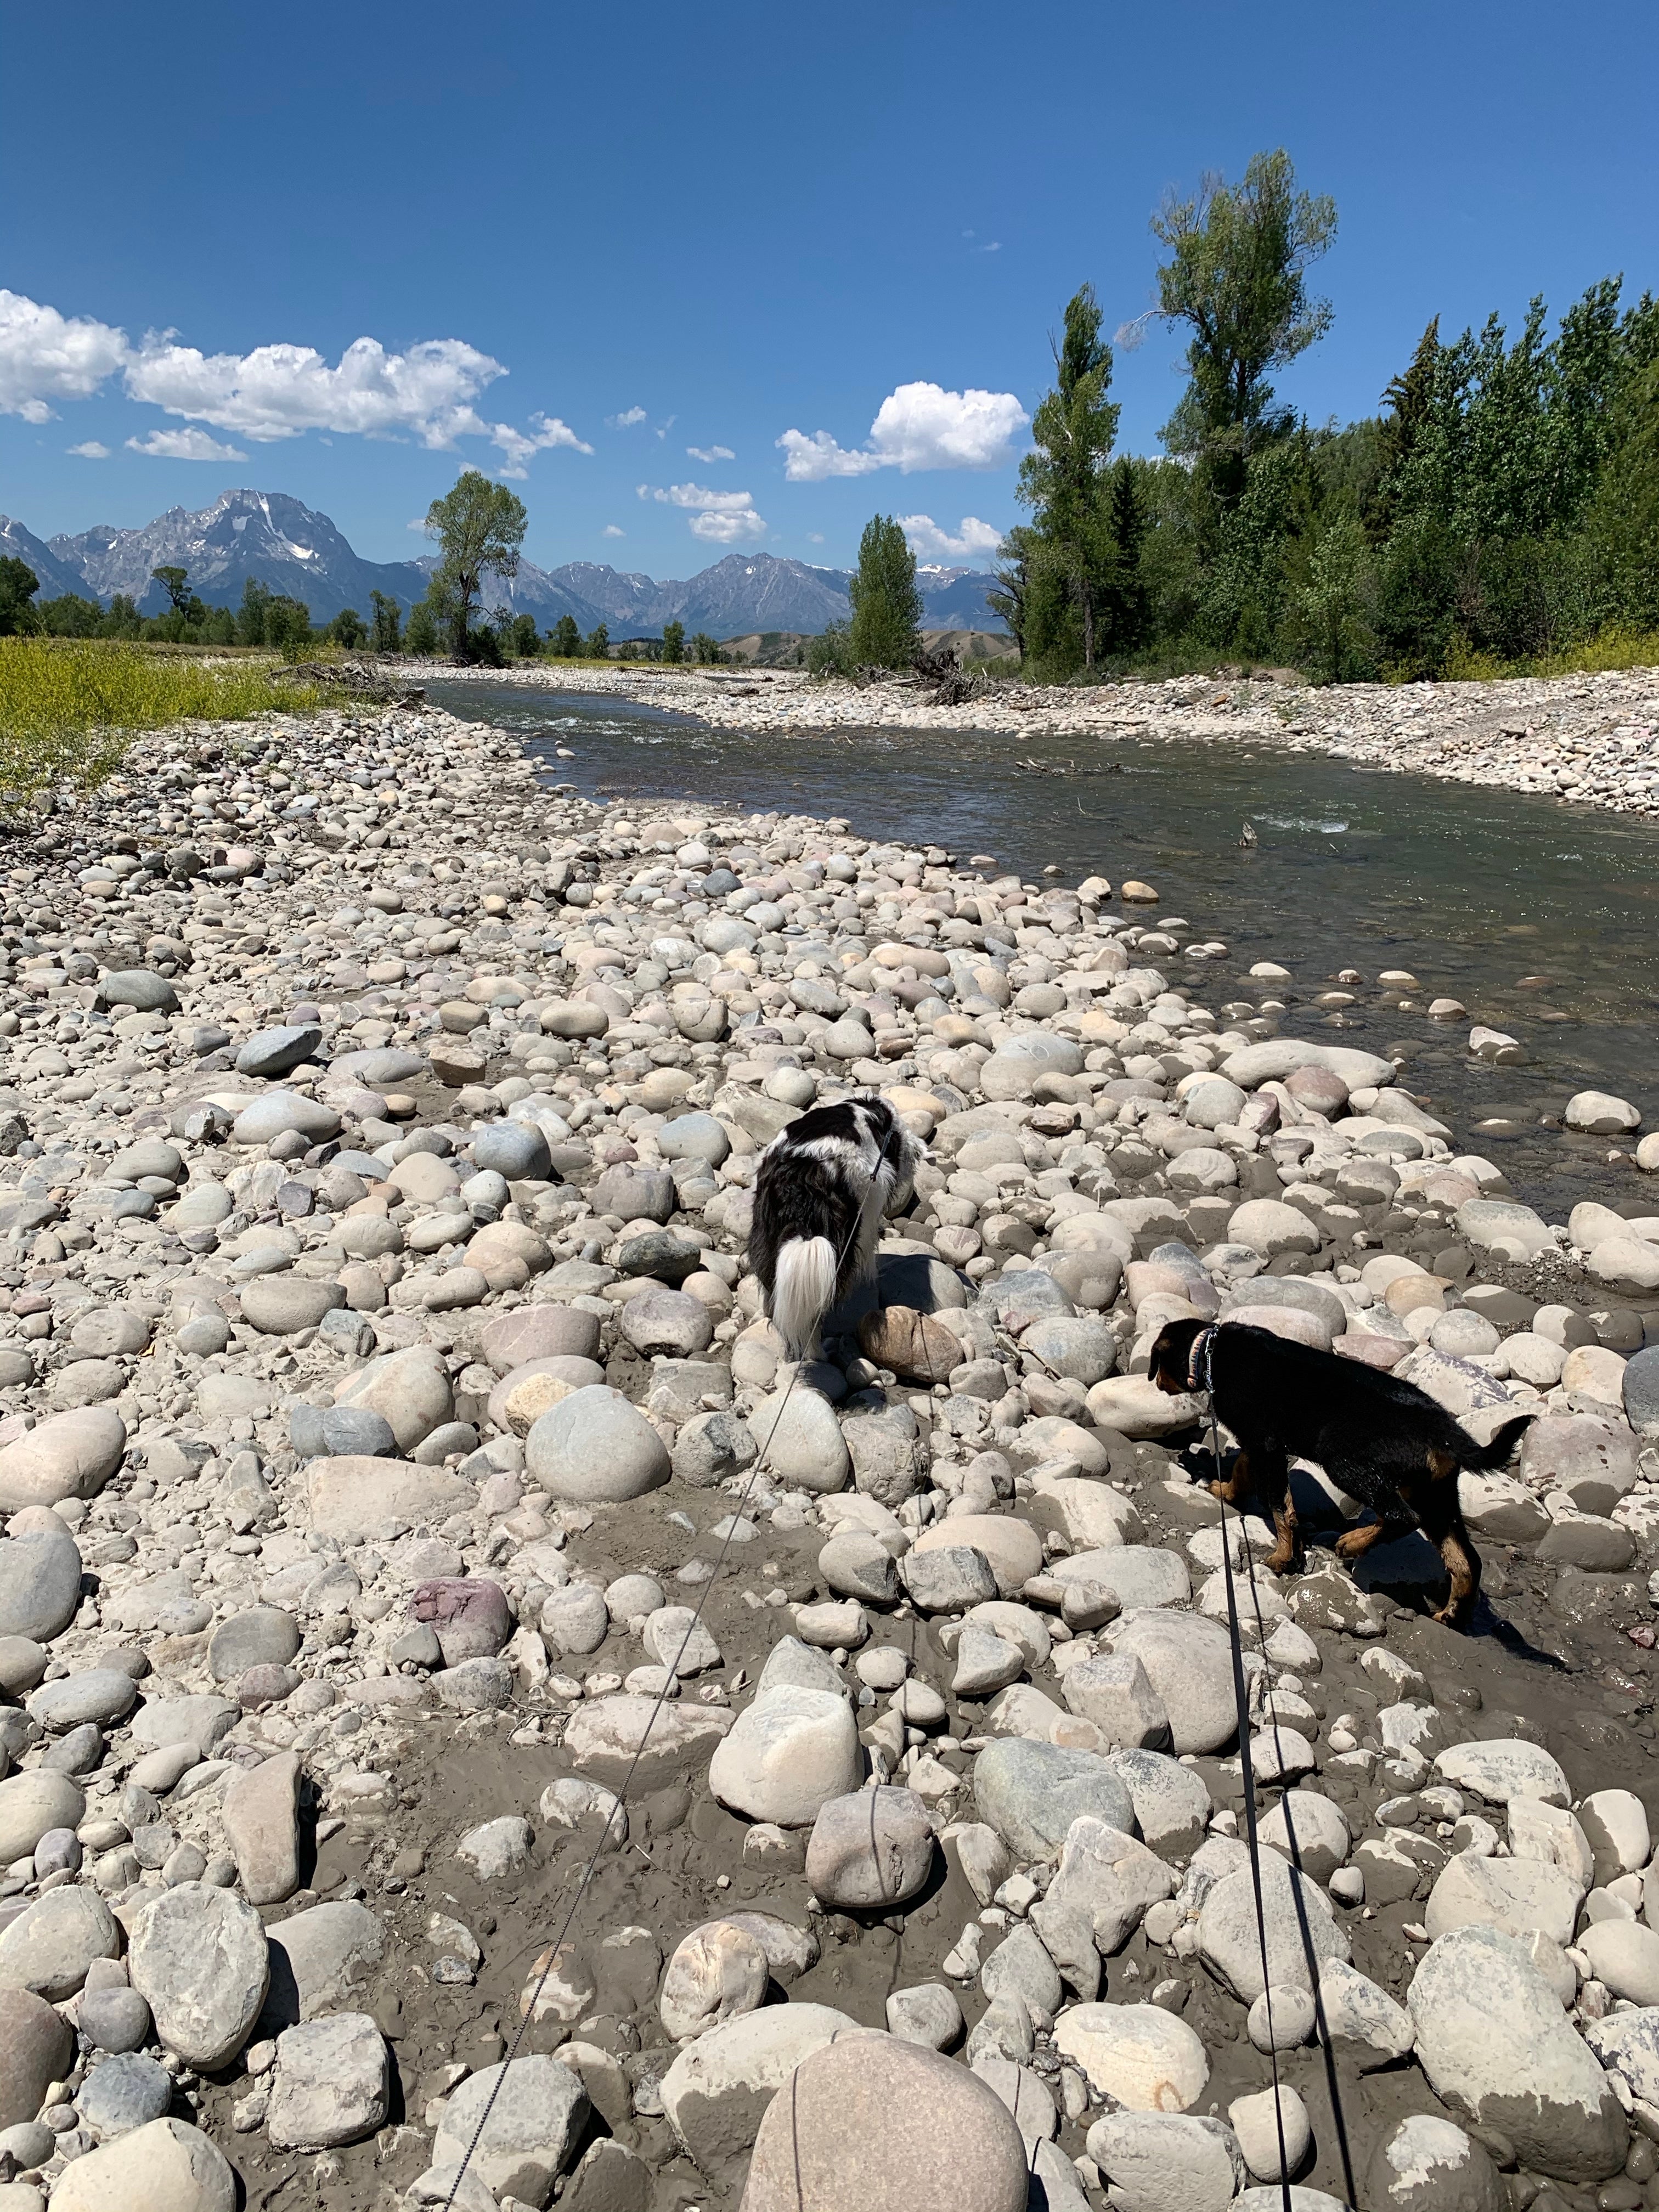 The pups enjoyed the creek